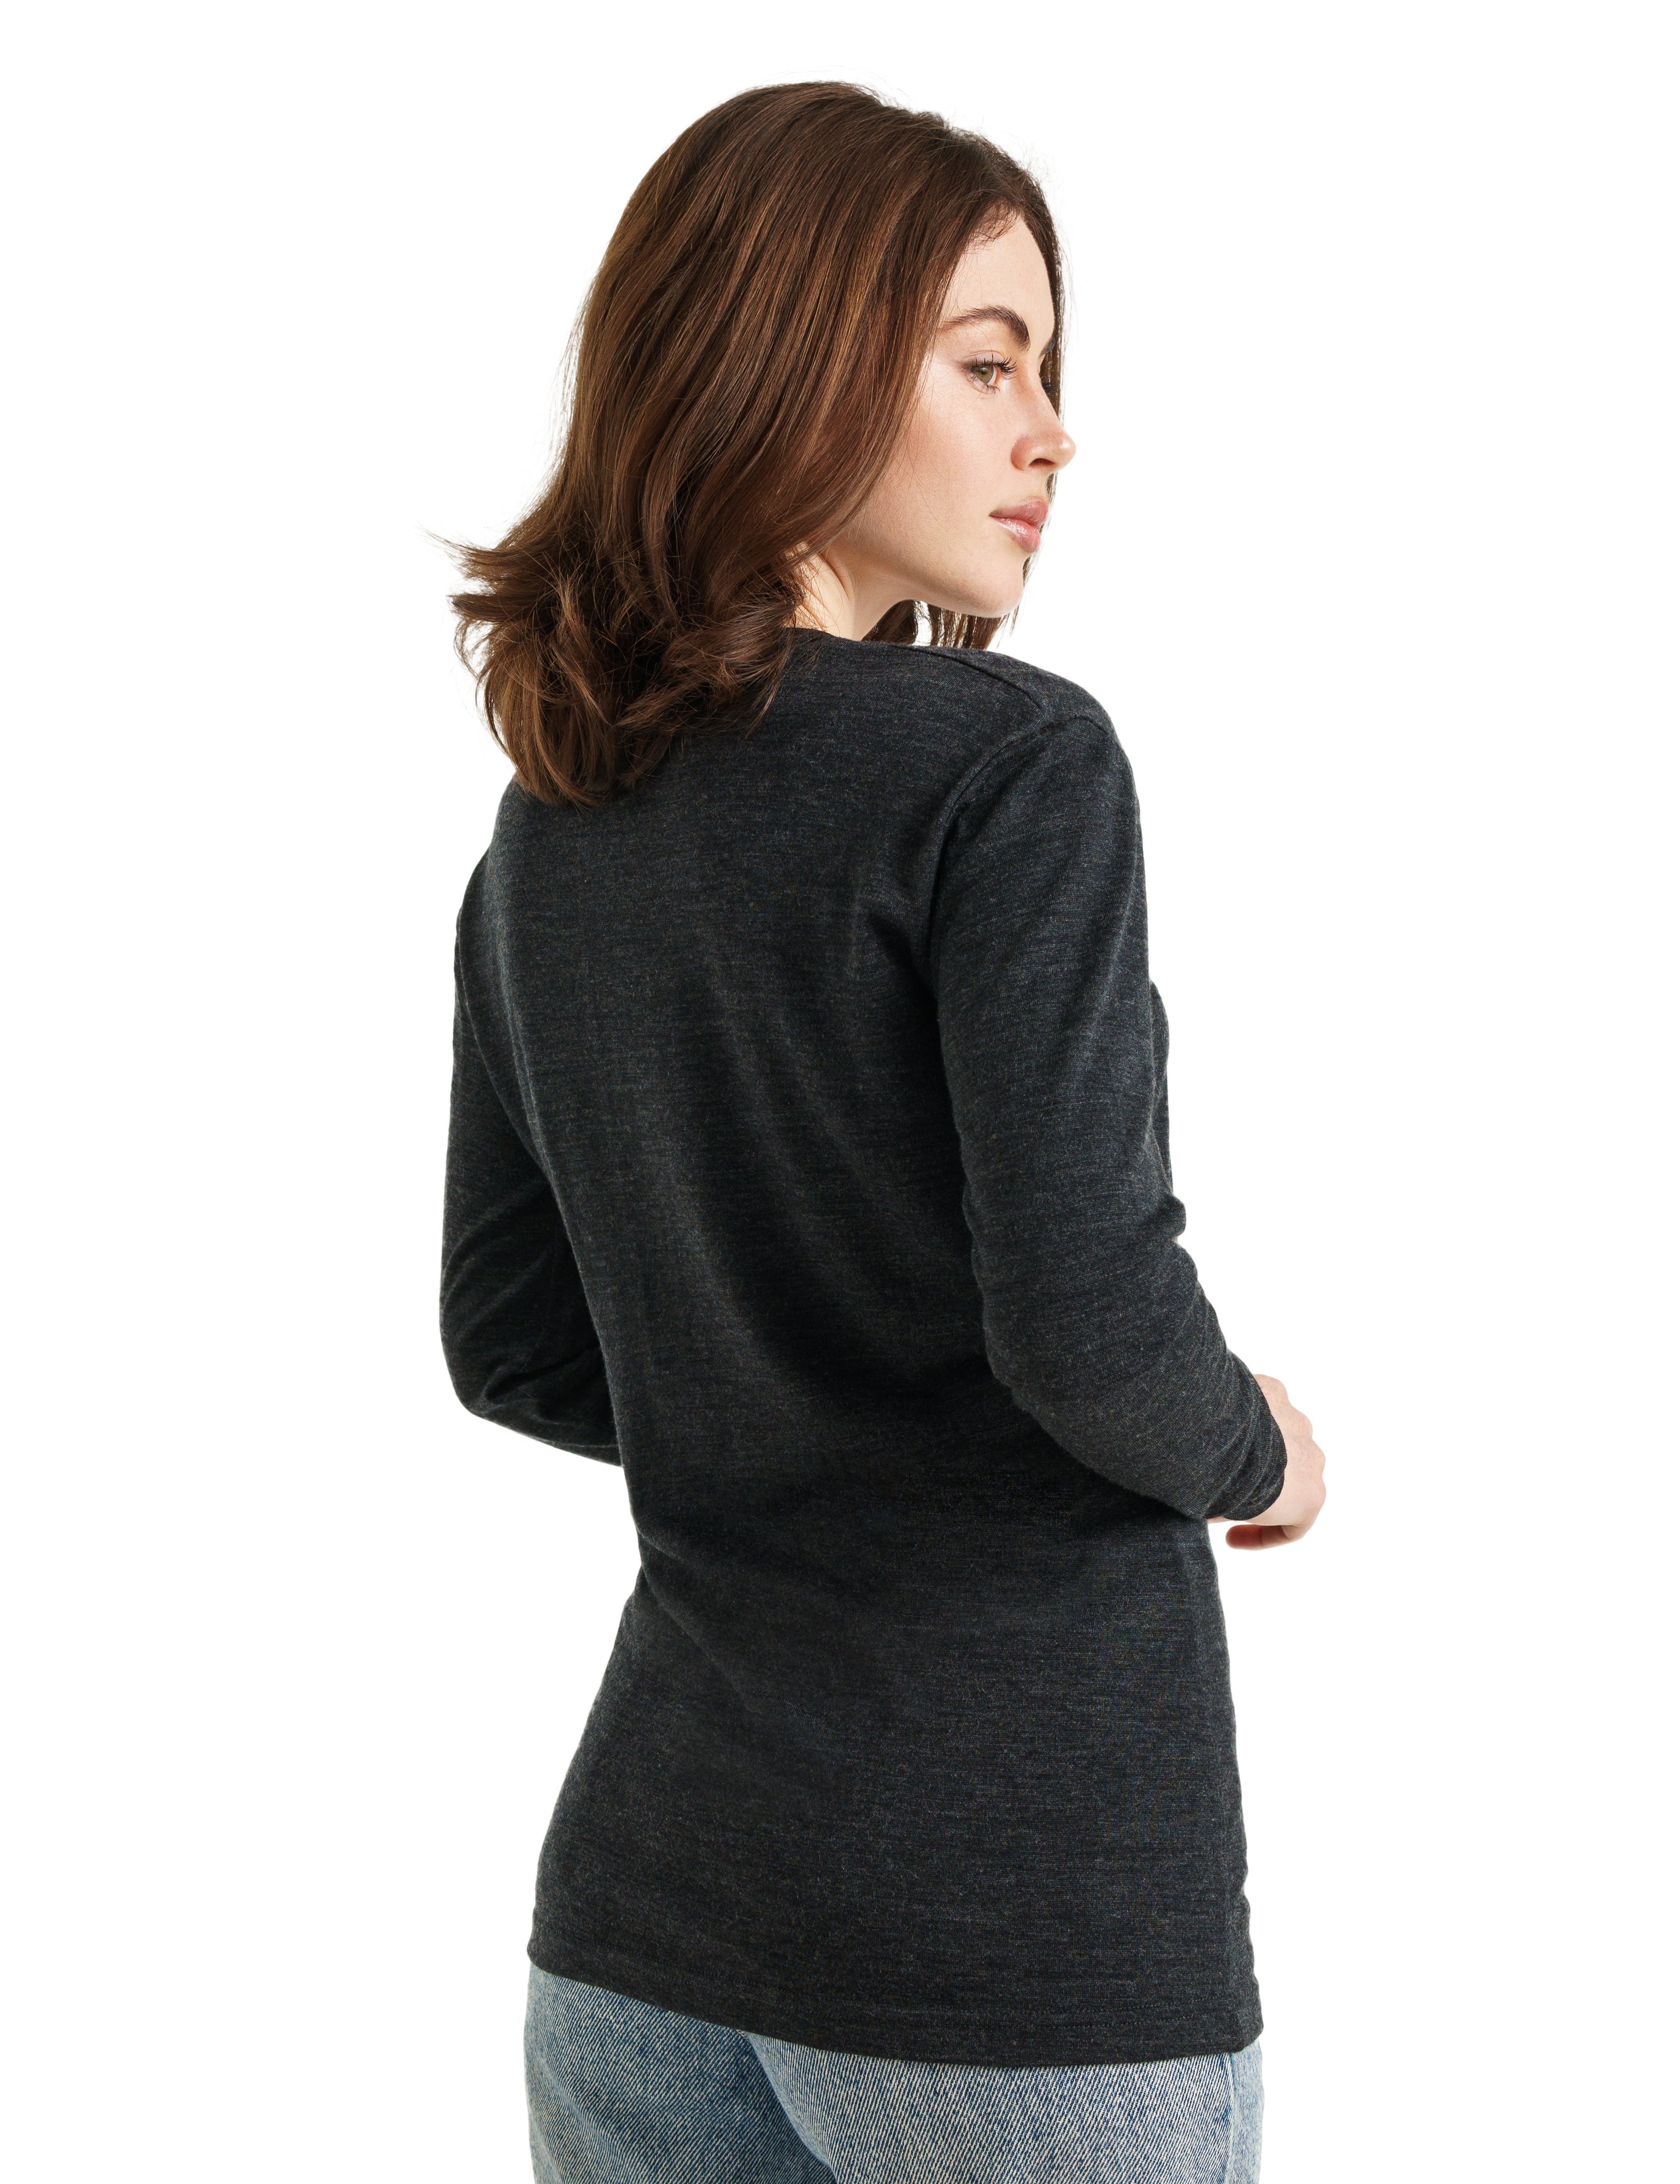 Shop Women Merino wool SL Slip Type Thermal Set Dark Grey at Woollen Wear